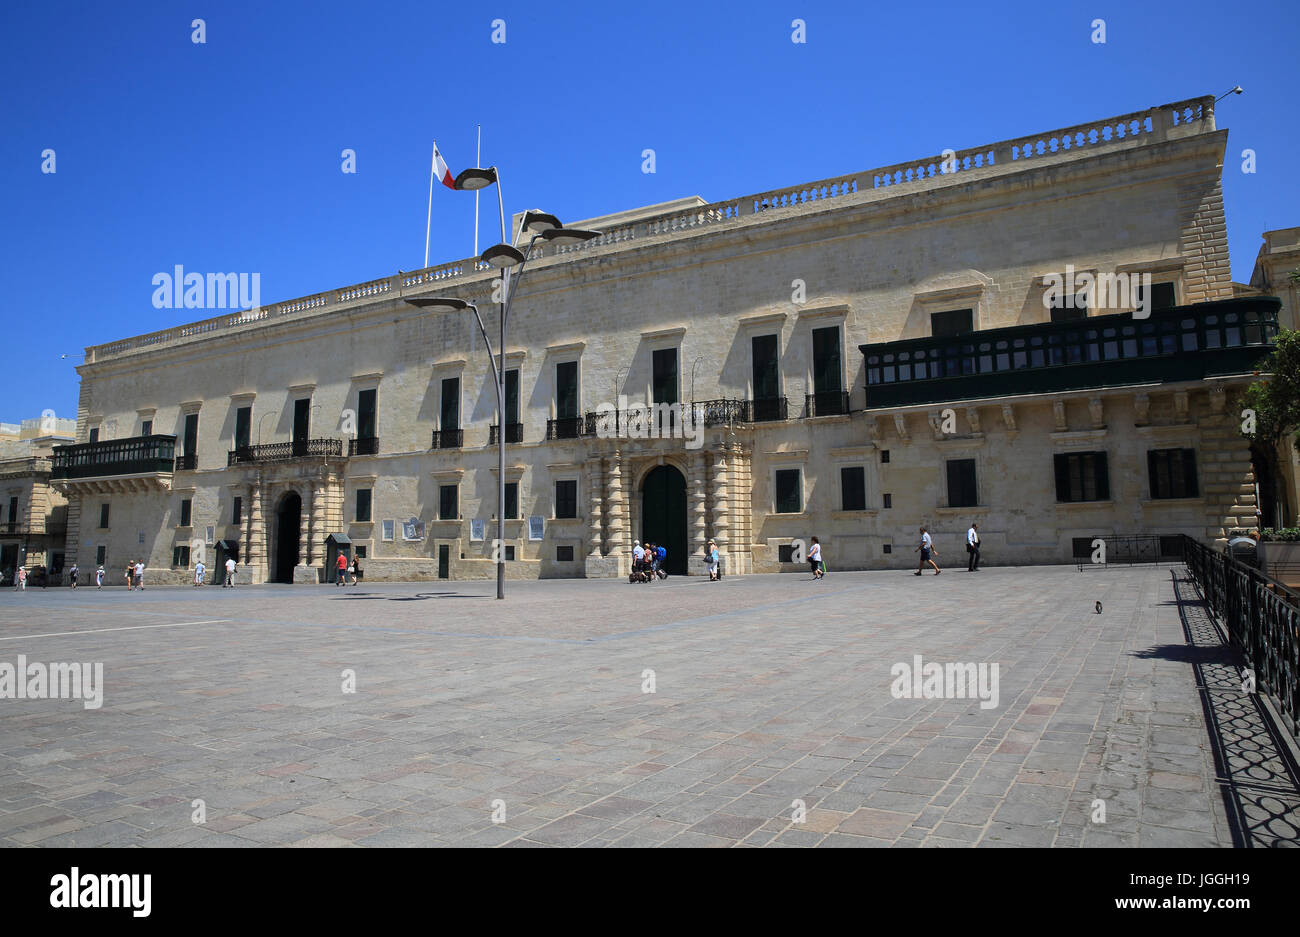 File:Grandmaster's Palace, Malta (41637543714).jpg - Wikimedia Commons